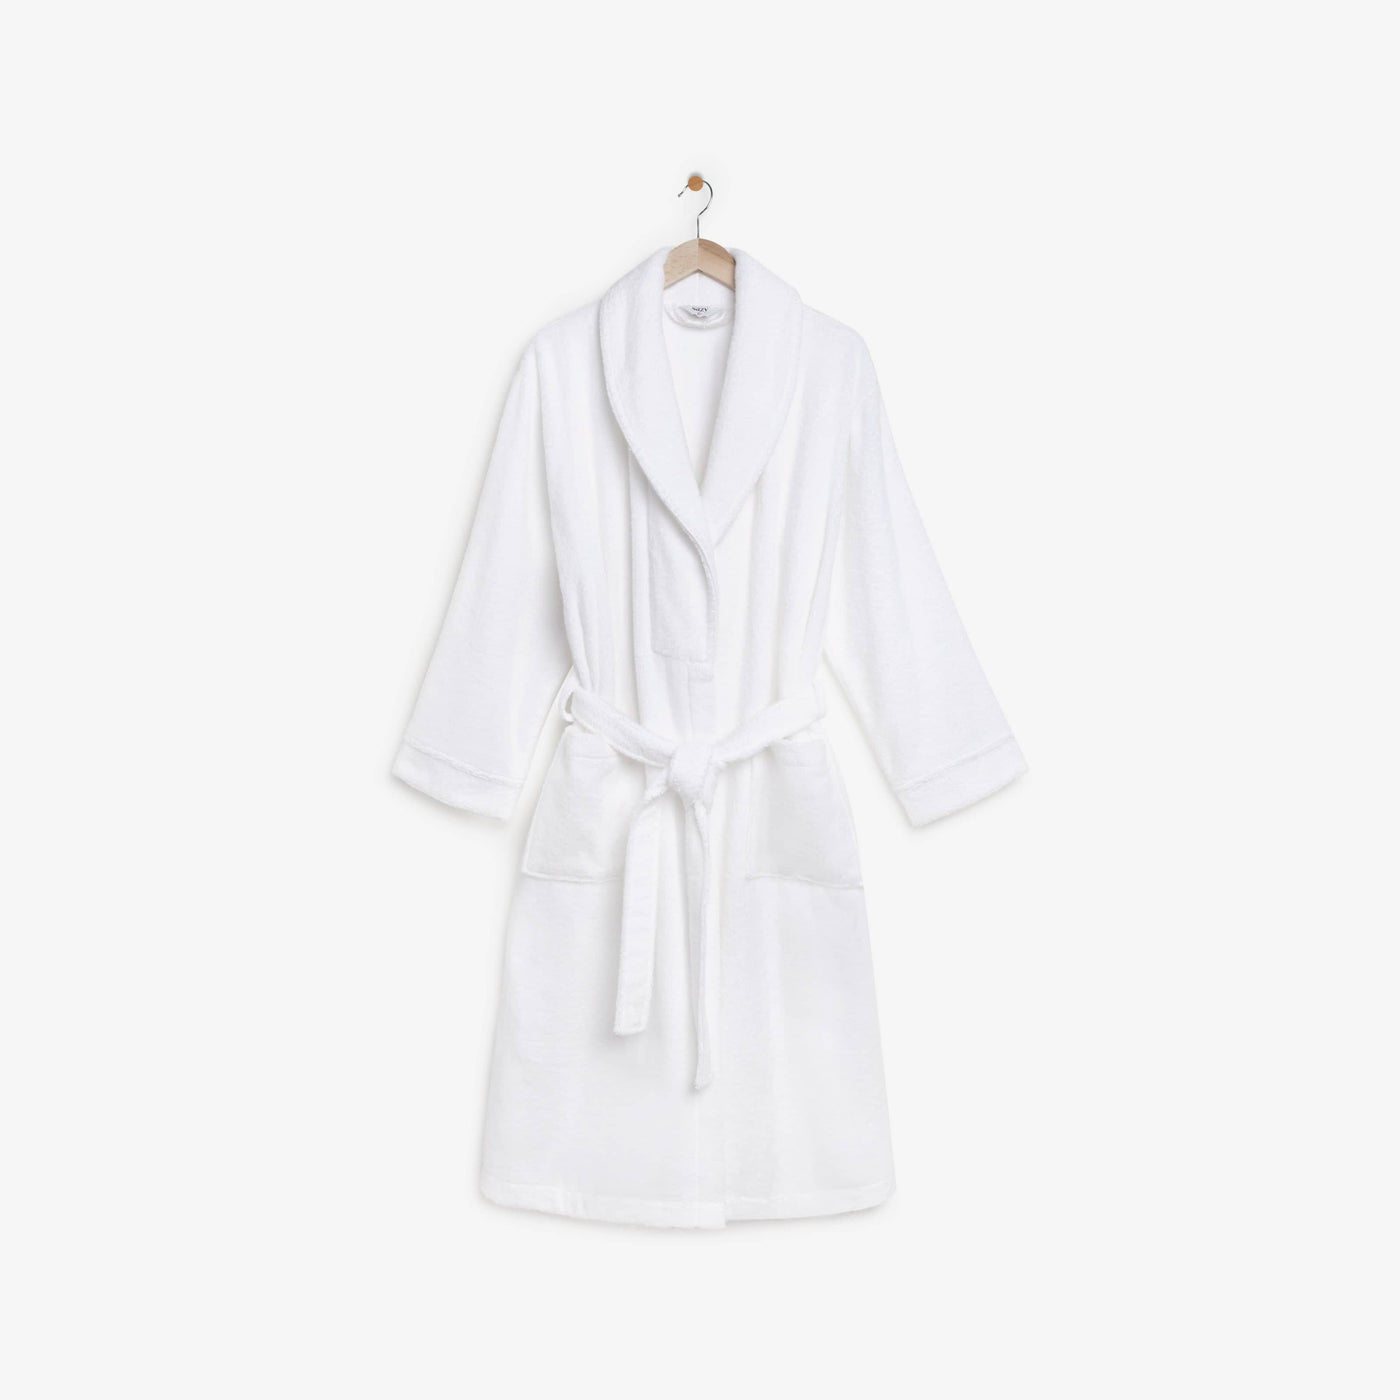 Rupert Aqua Fibro Extra Soft 100% Turkish Cotton Men's Dressing Gown, White, L 1